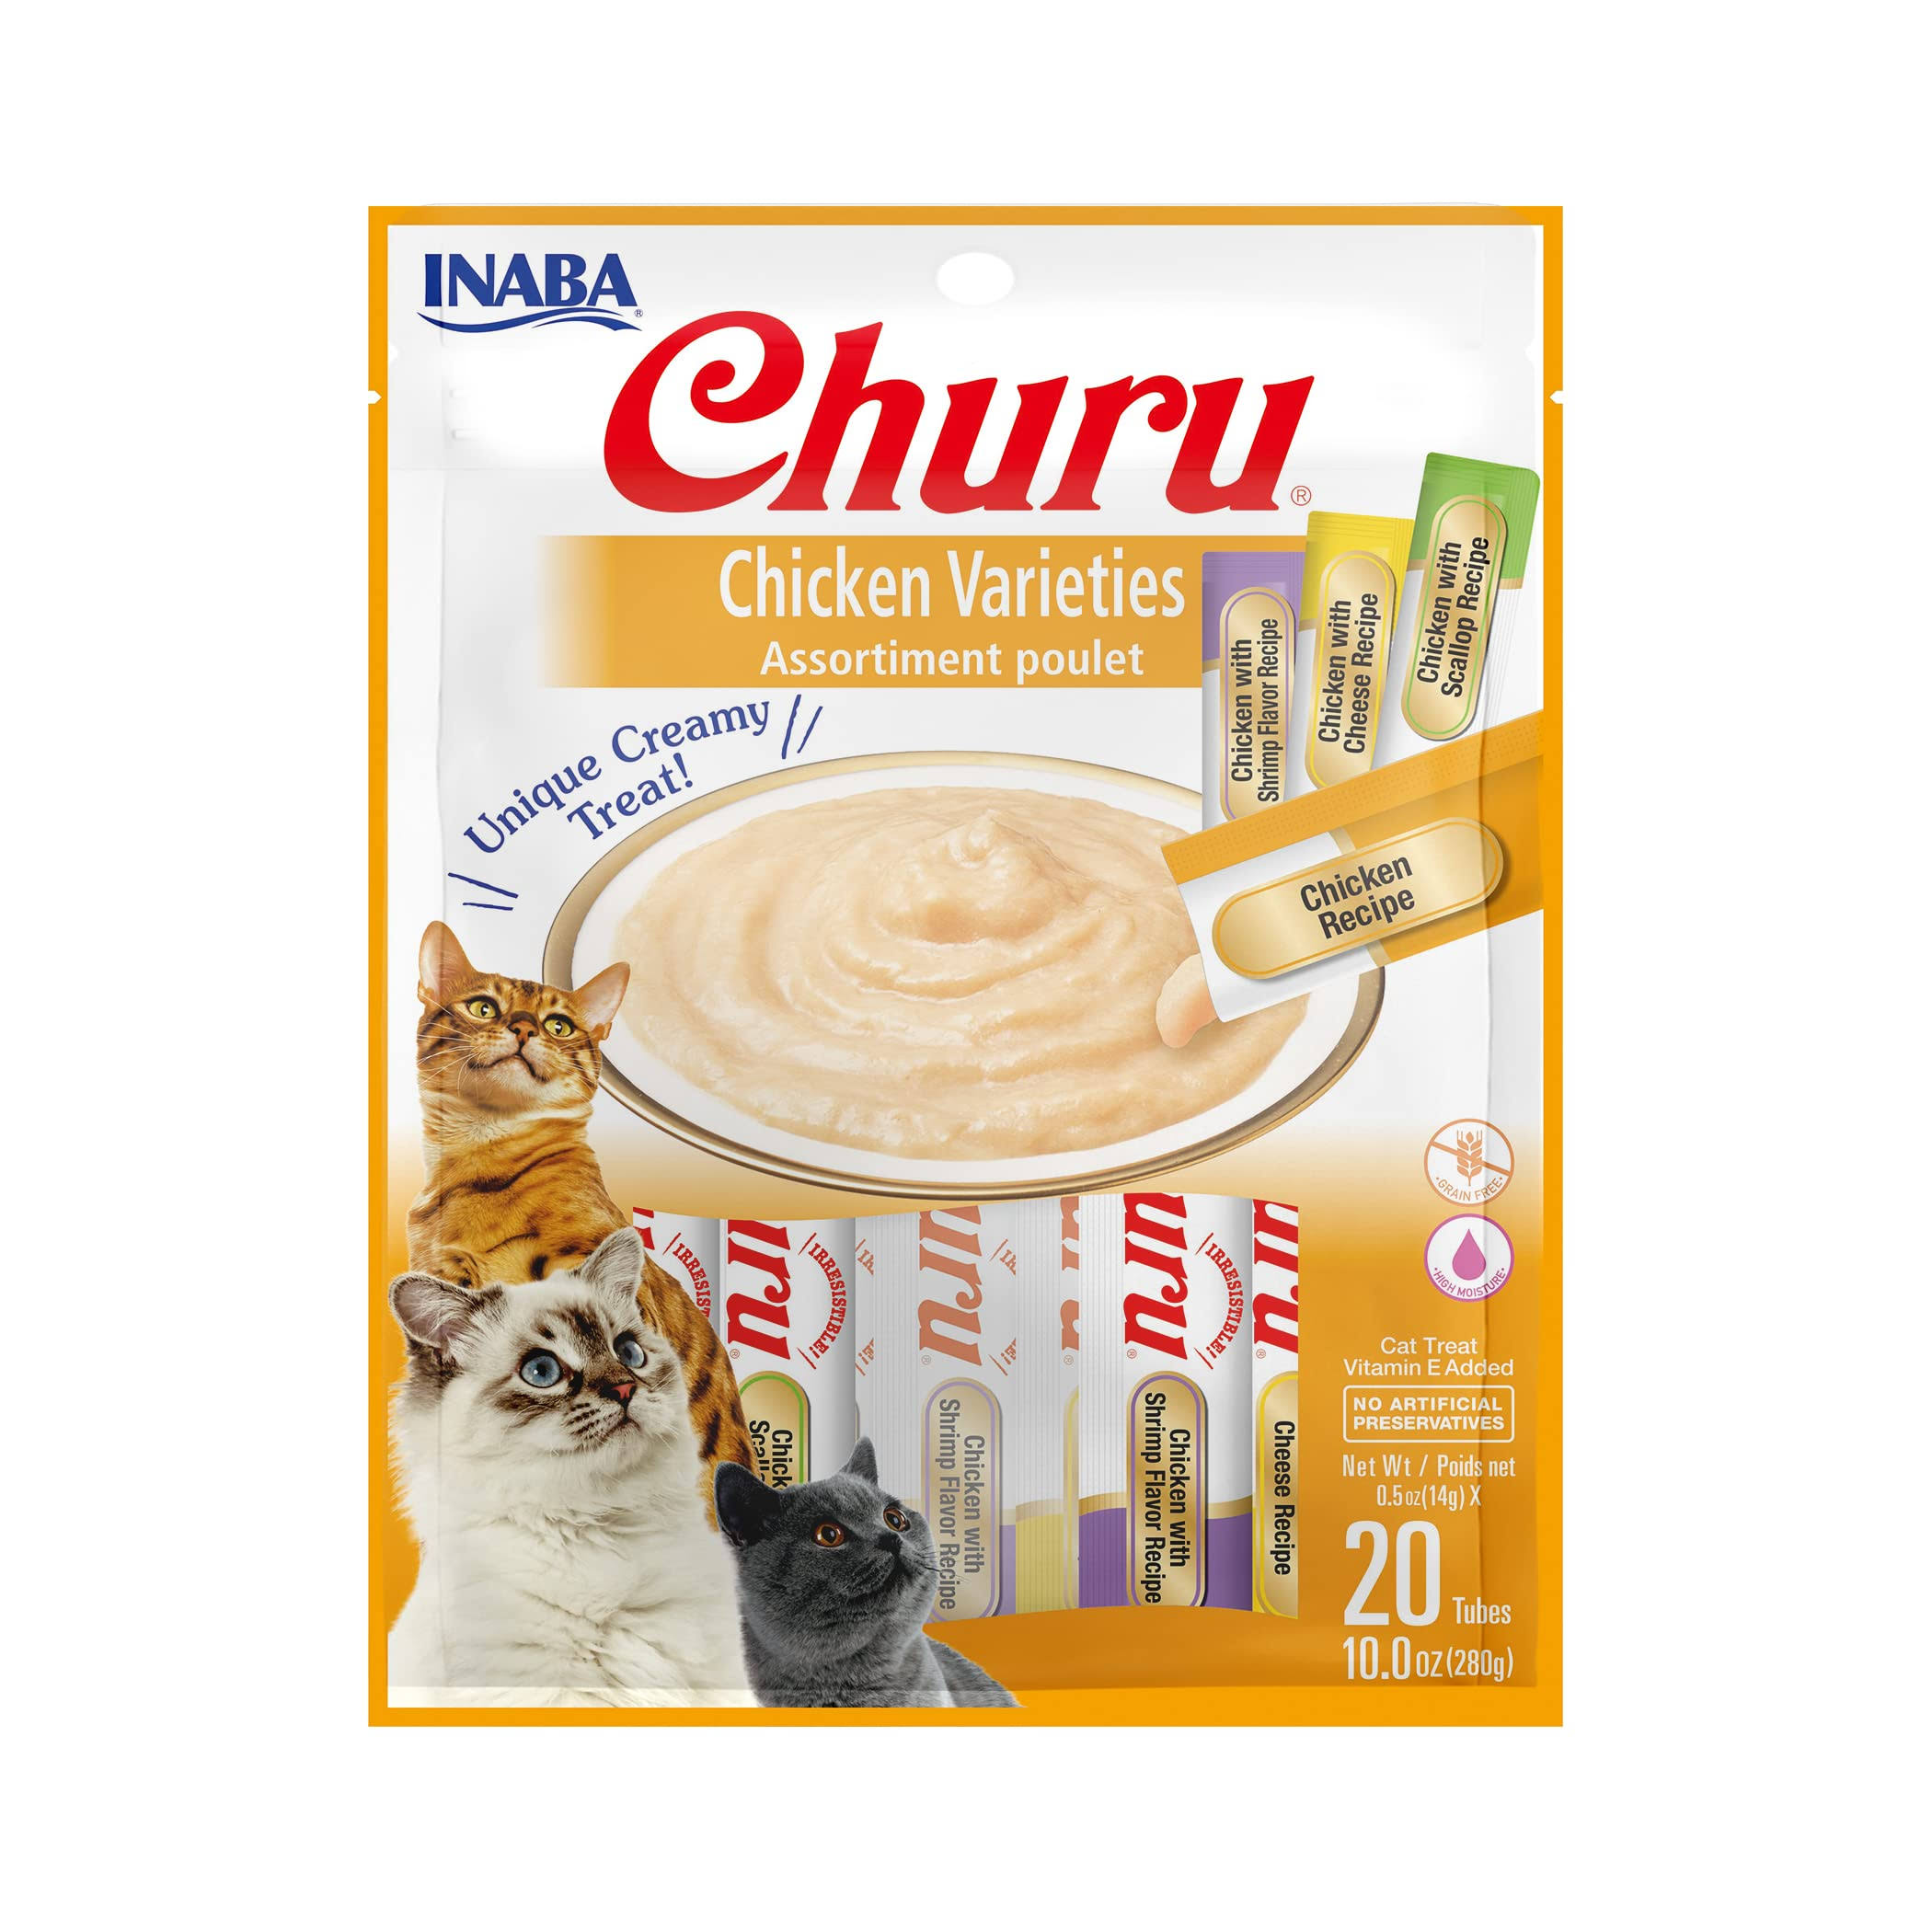 Inaba Churu Chicken Varieties Bag Cat Treats 20 Tubes